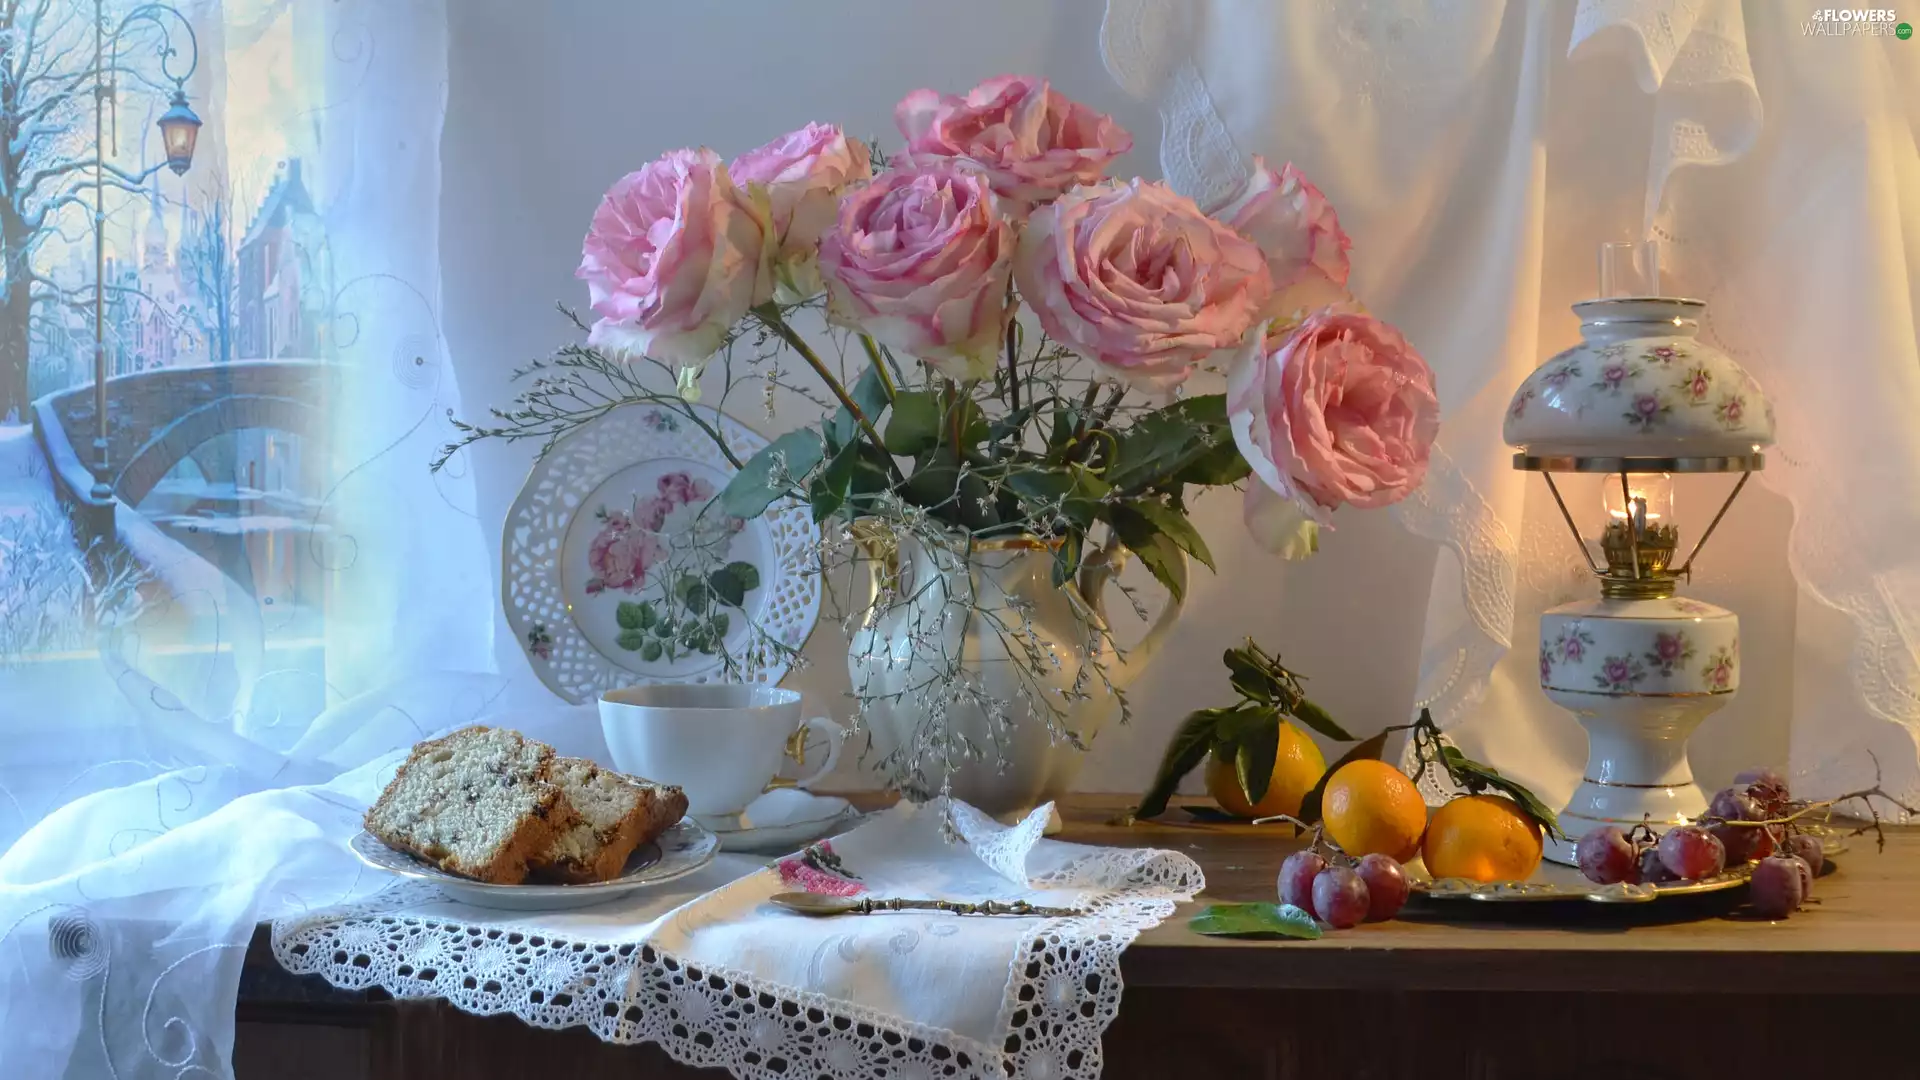 bouquet, jug, Fruits, Lamp, cake, roses, Pink, Plates